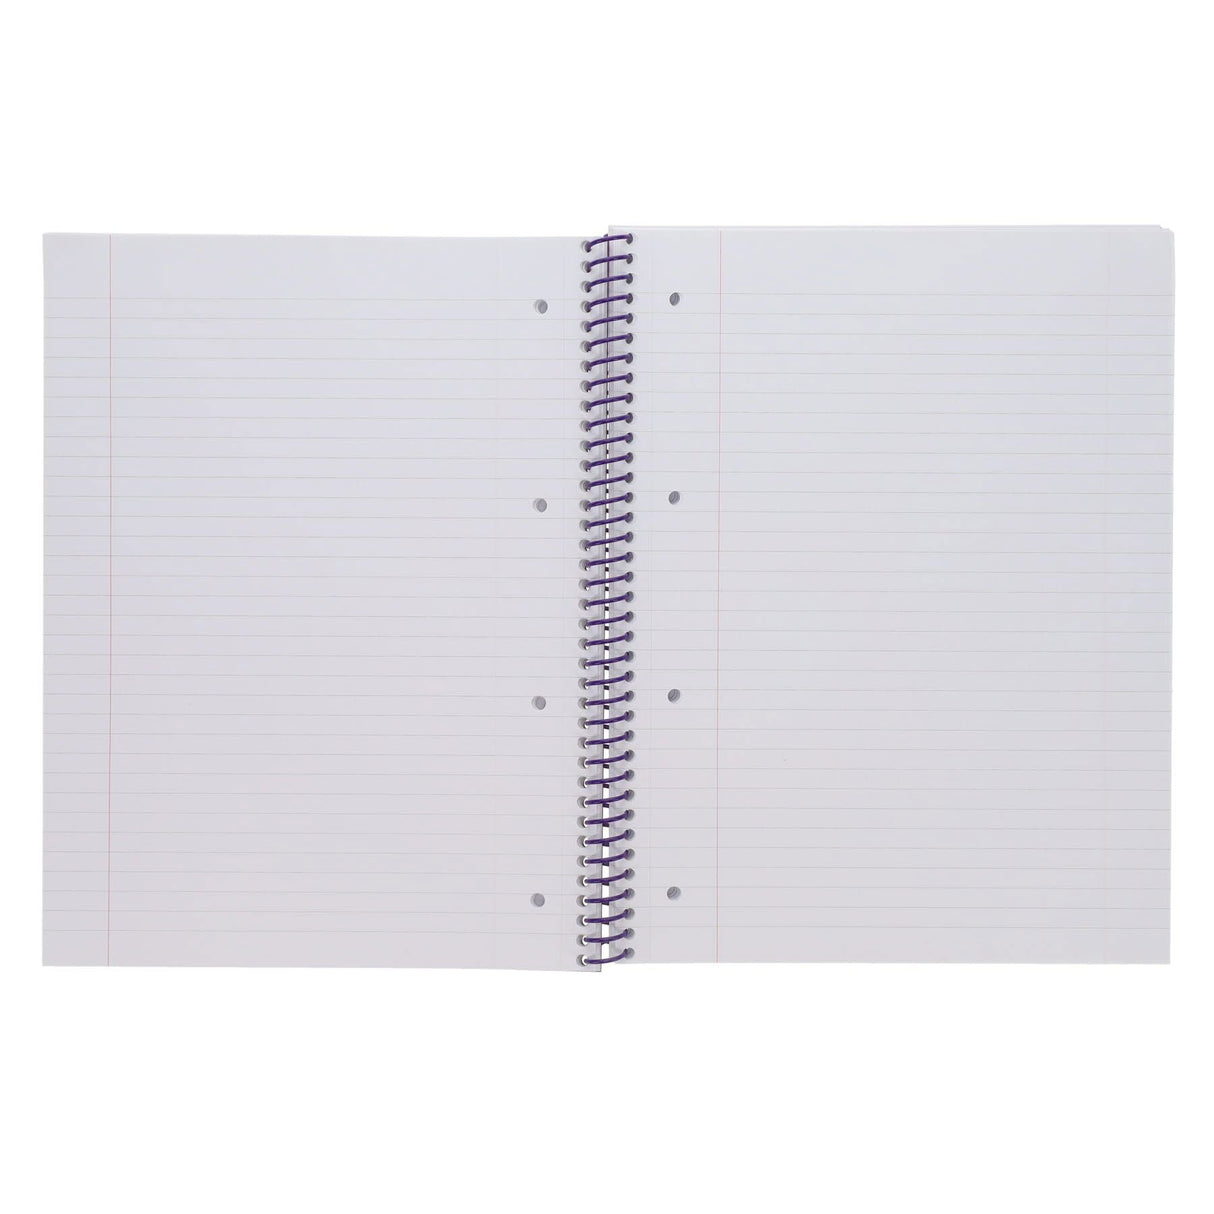 Premto A4 Spiral Notebook PP - 160 Pages - Printer Blue-A4 Notebooks-Premto|StationeryShop.co.uk